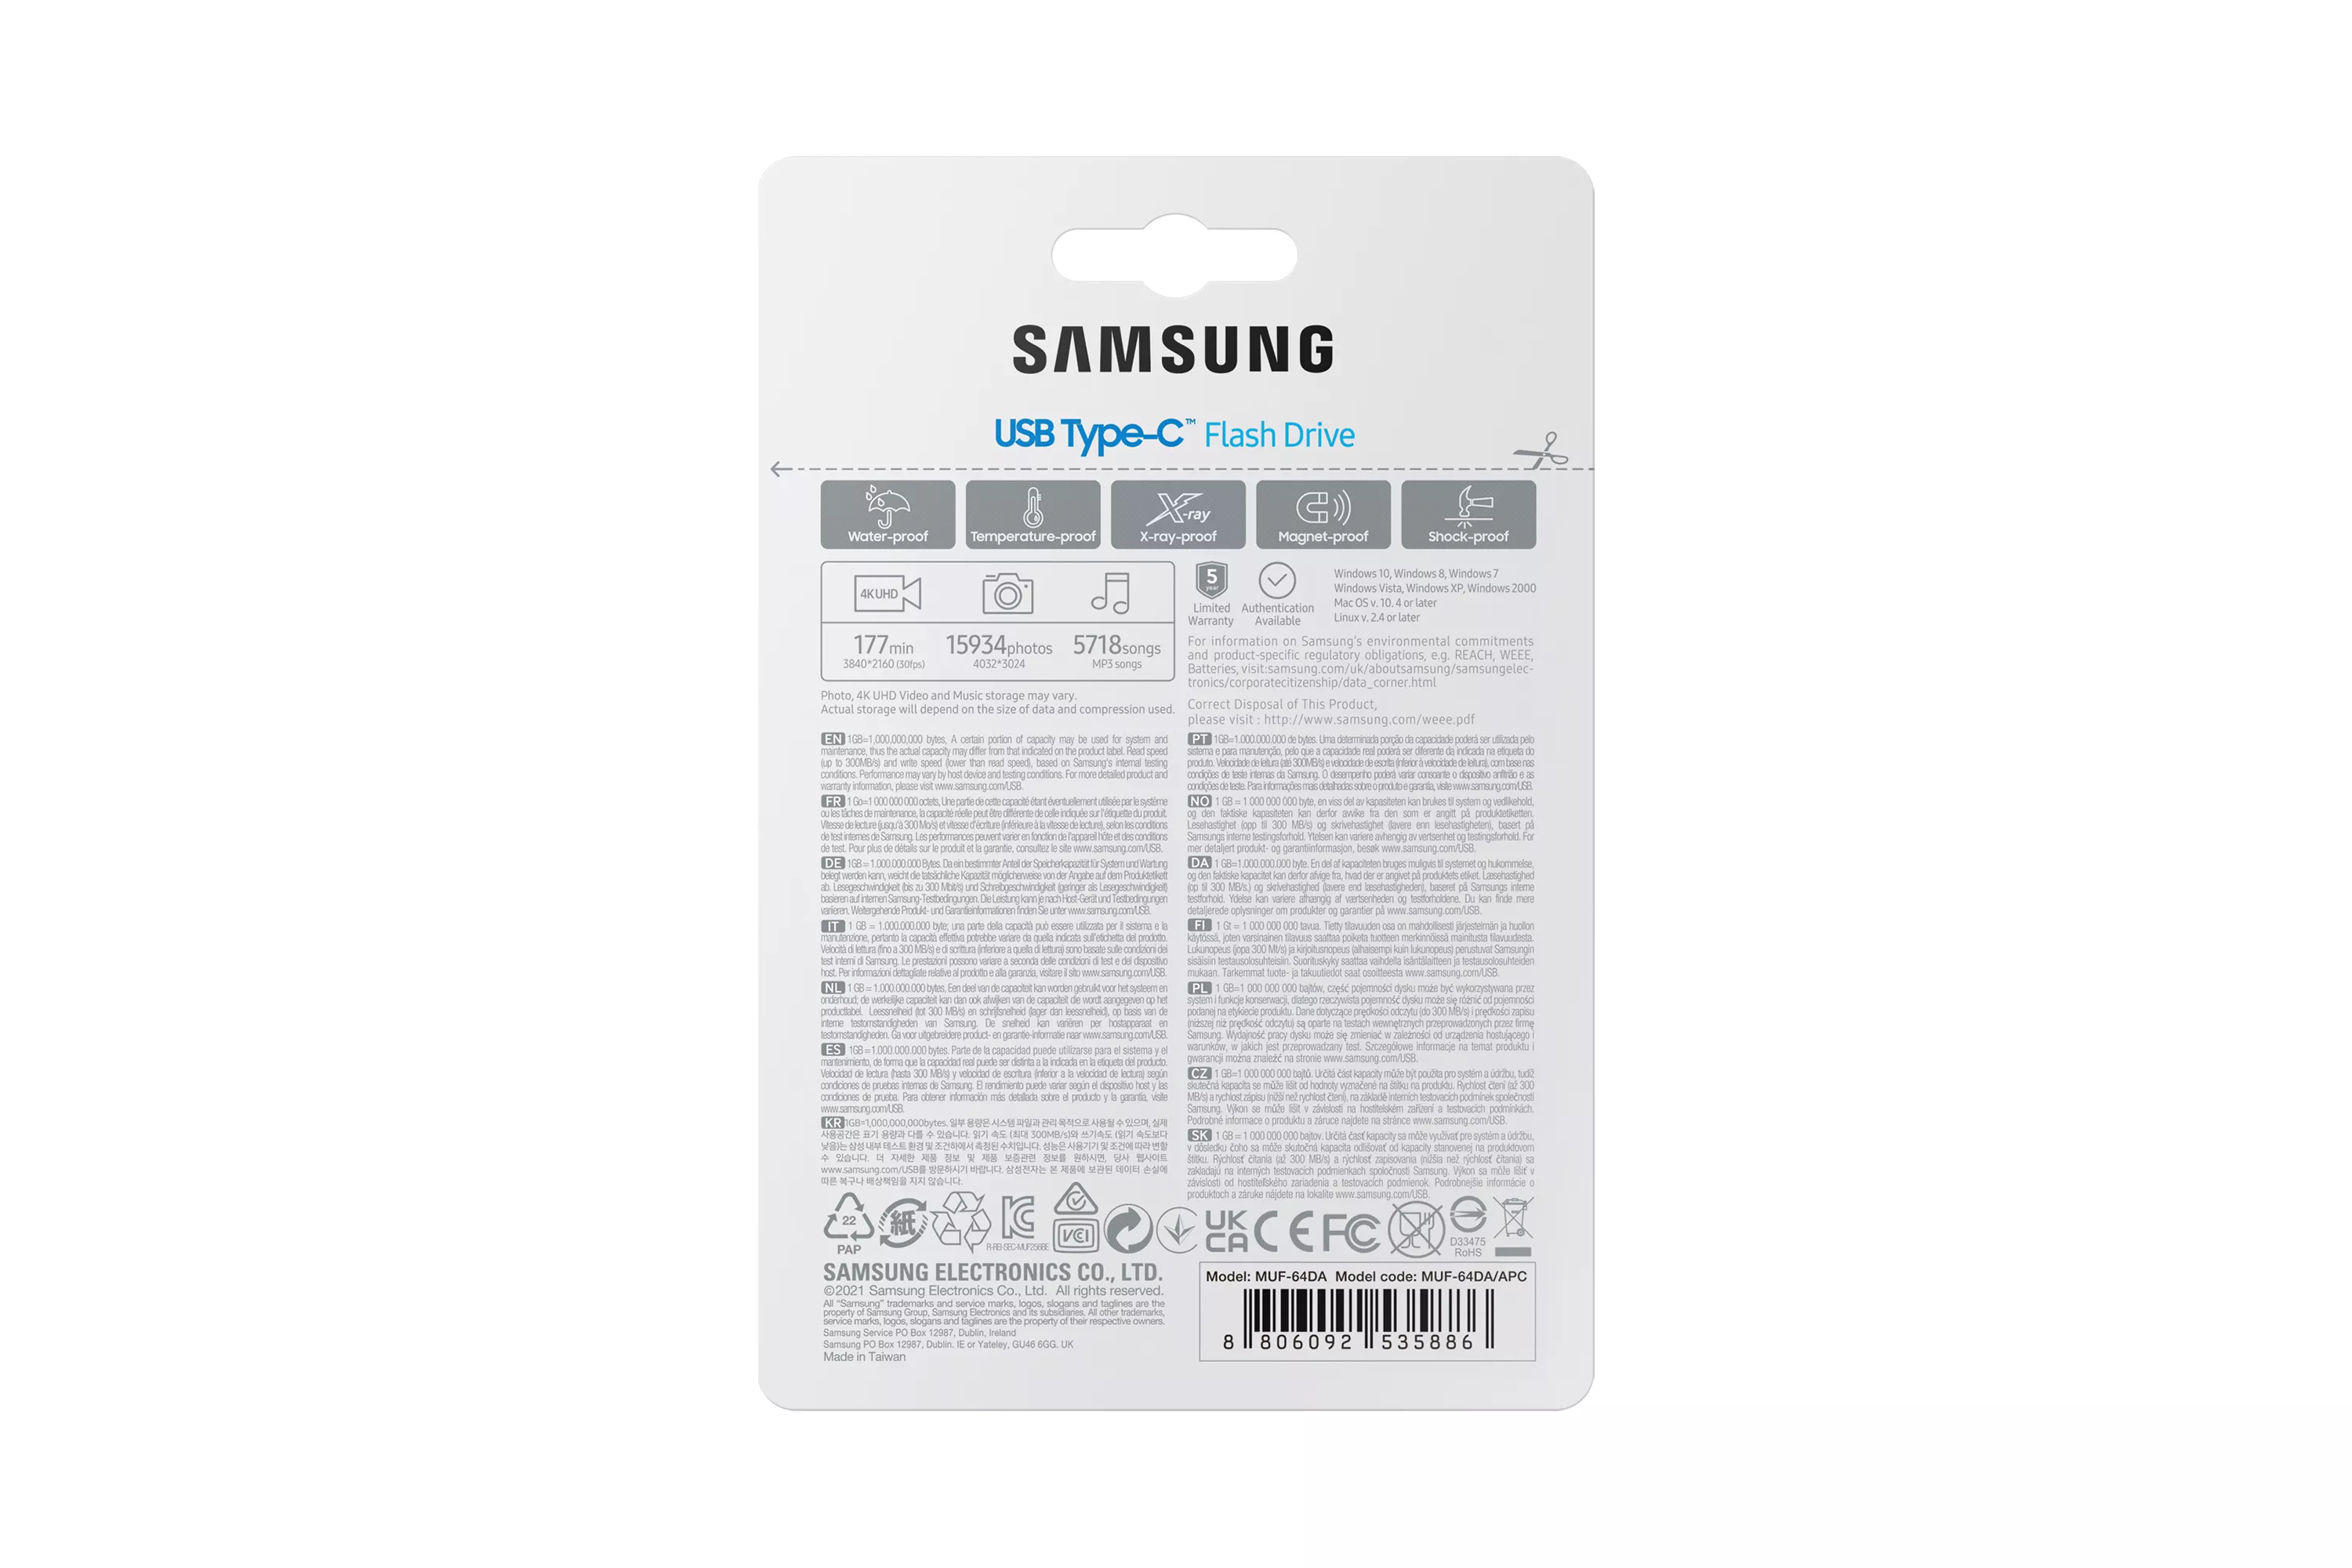 Vente SAMSUNG USB Type-C 64Go 300Mo/s USB 3.1 Flash Samsung au meilleur prix - visuel 10